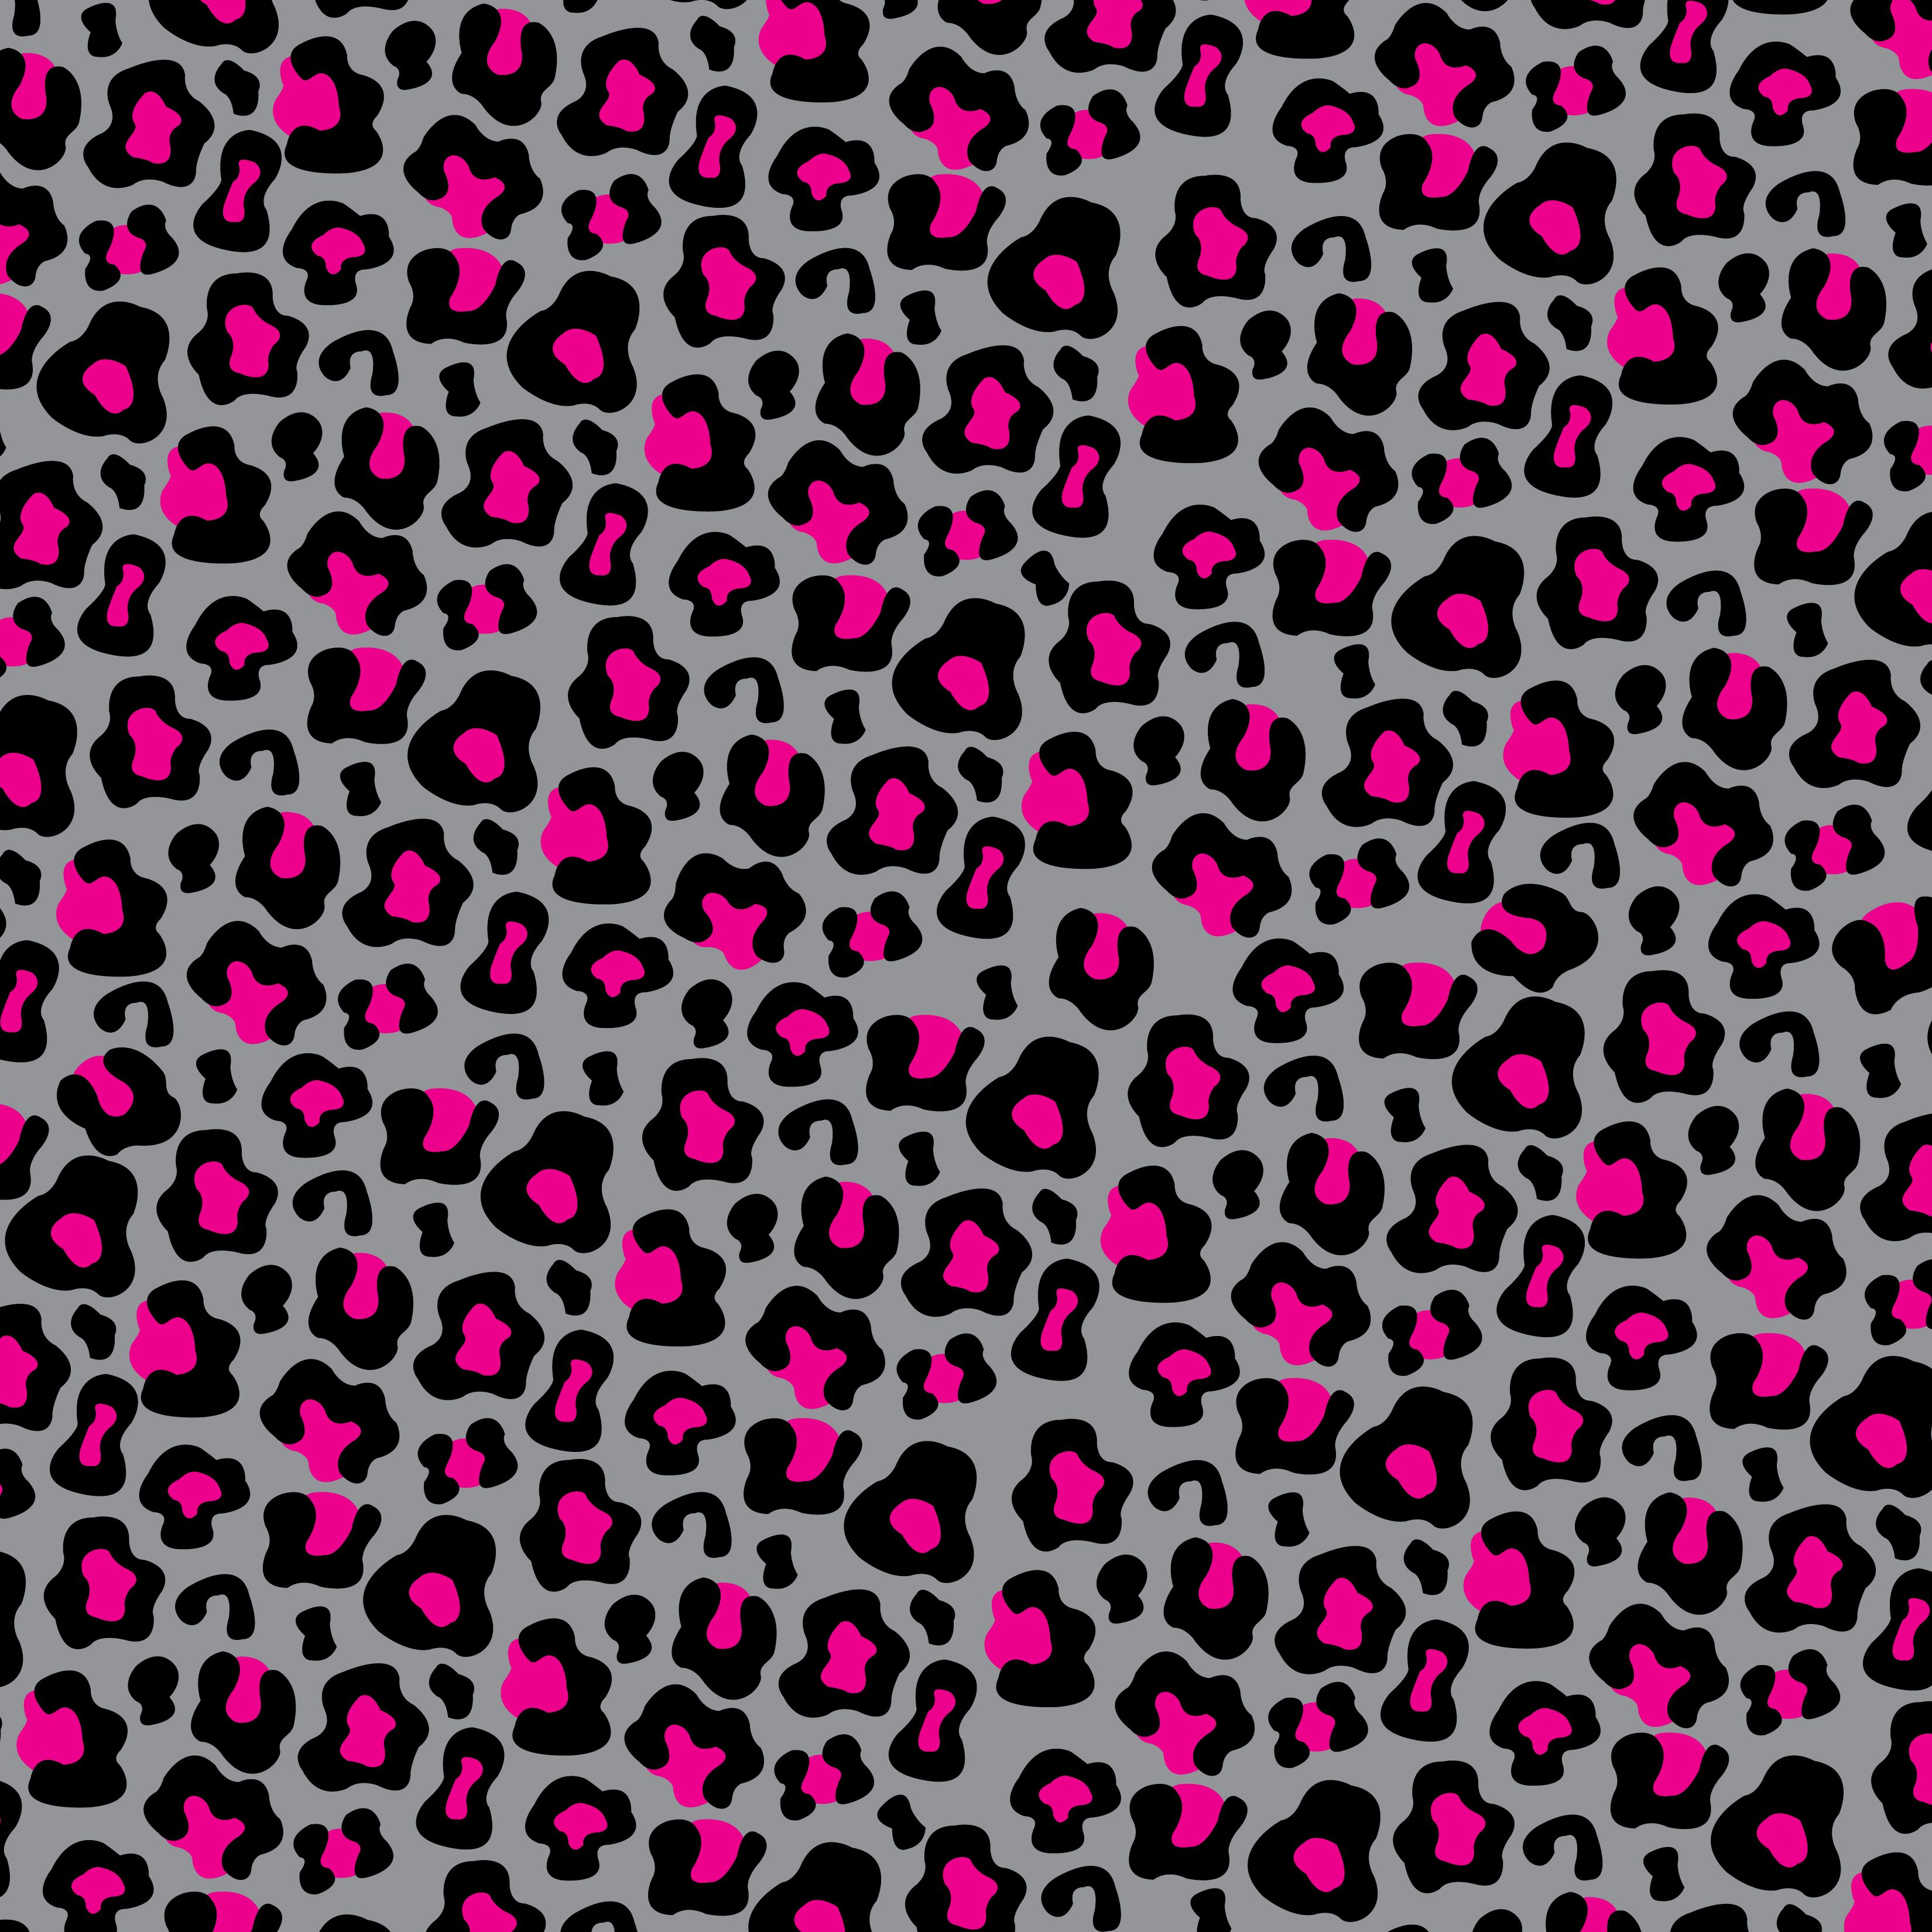 7800 Cheetah Print Stock Photos Pictures  RoyaltyFree Images  iStock   Cheetah print pattern Cheetah print background Cheetah print vector